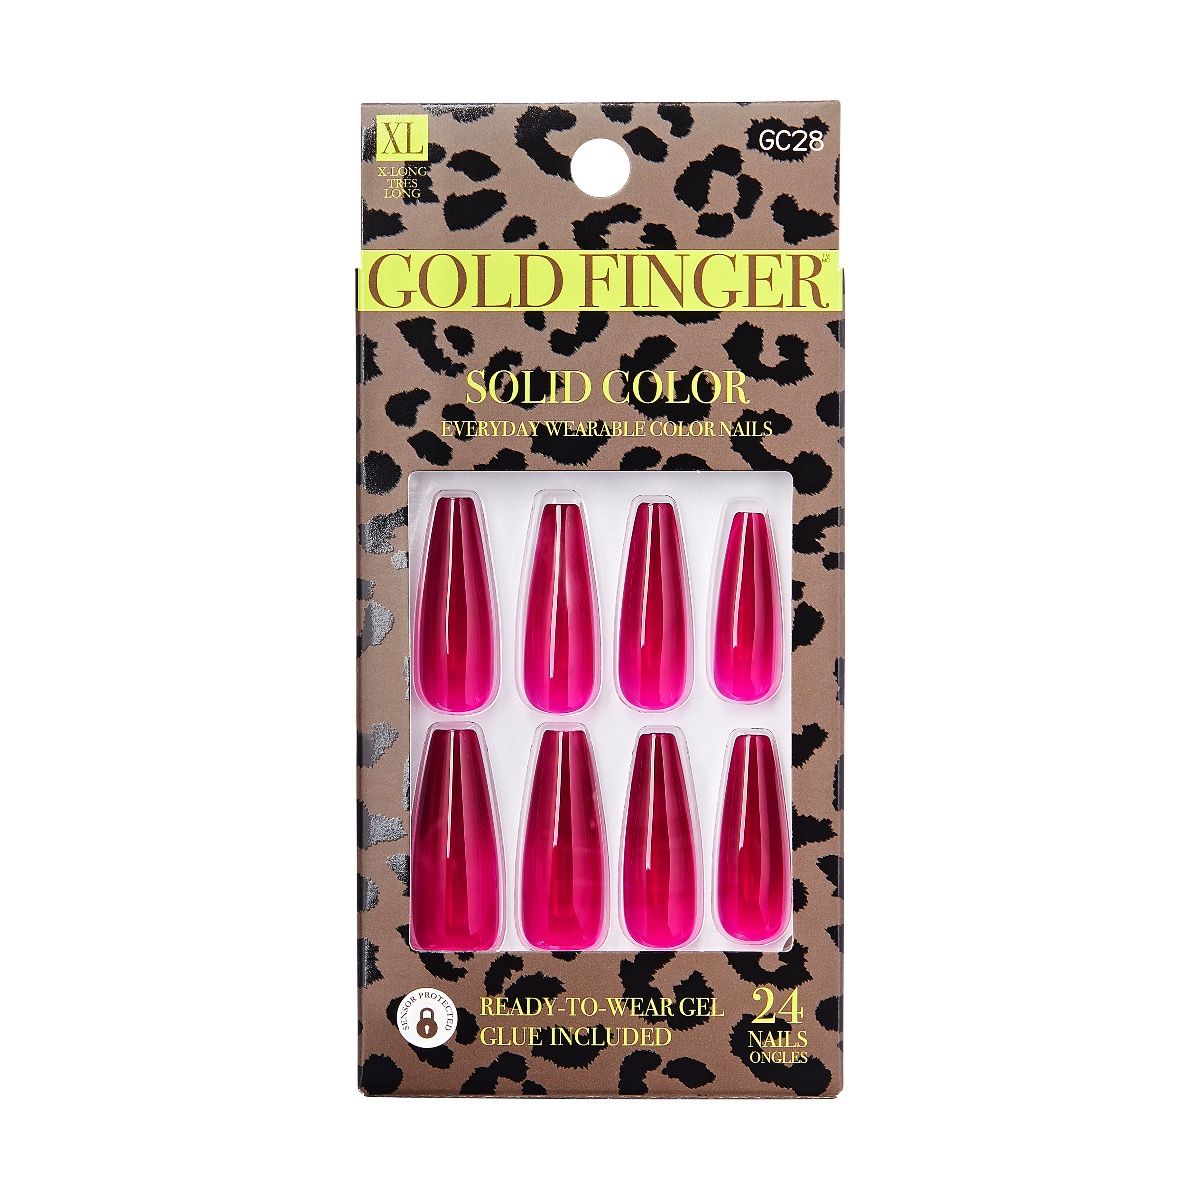 KISS Gold Finger Solid Color 24 Nails - #GC28(DC)